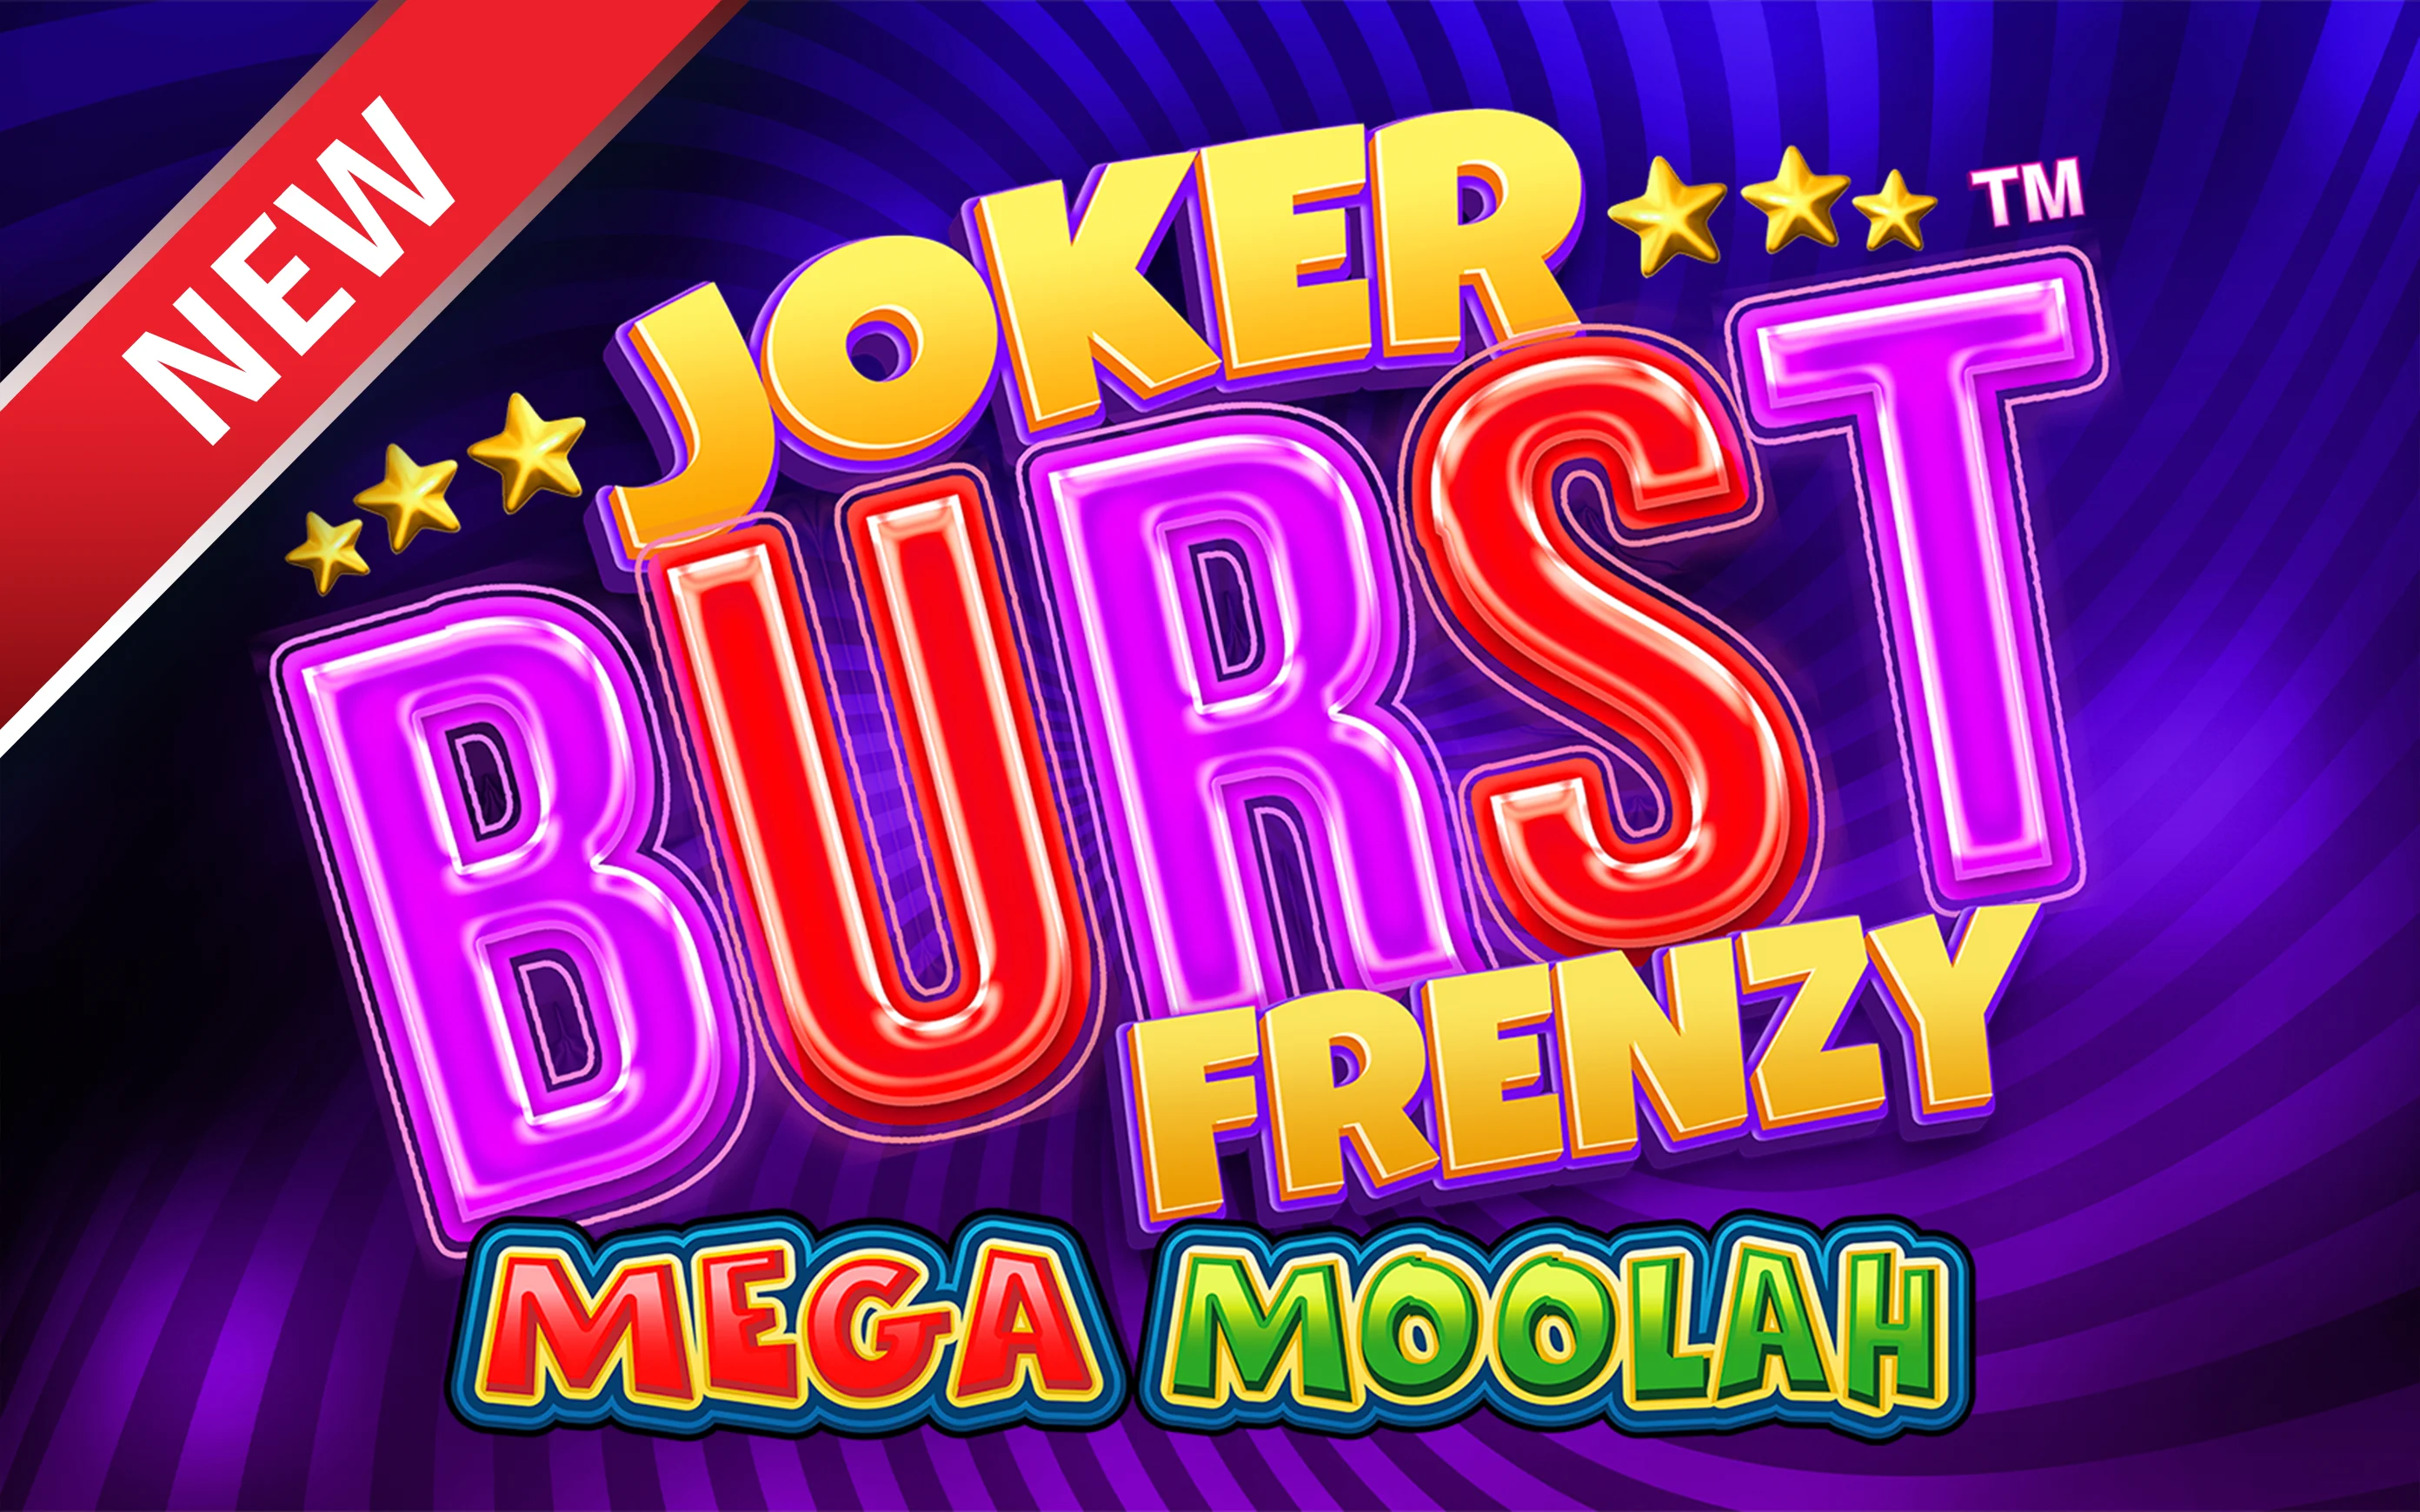 Juega a Joker Burst Frenzy Mega Moolah en el casino en línea de Starcasino.be